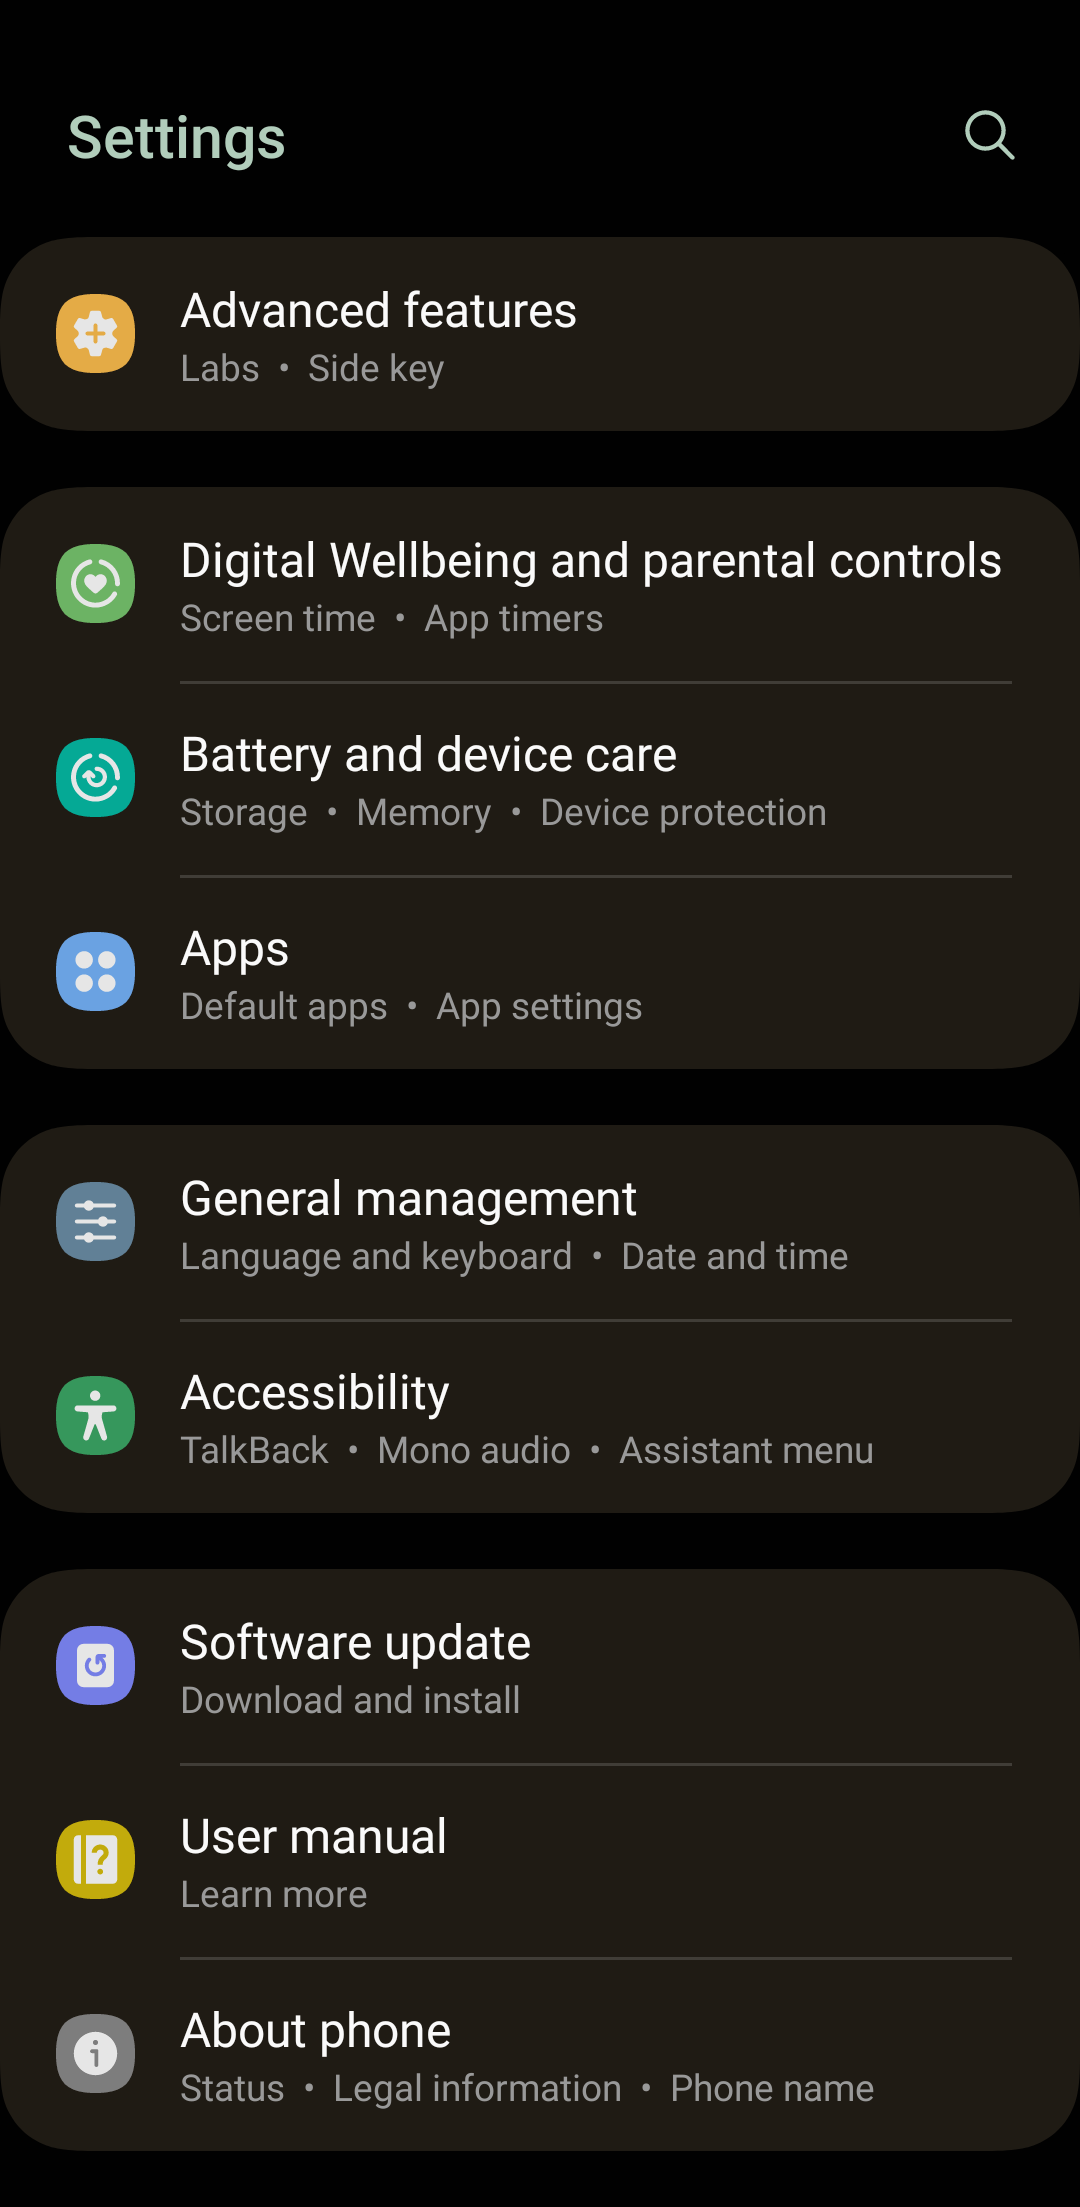 Screenshot of Samsung Galaxy settings